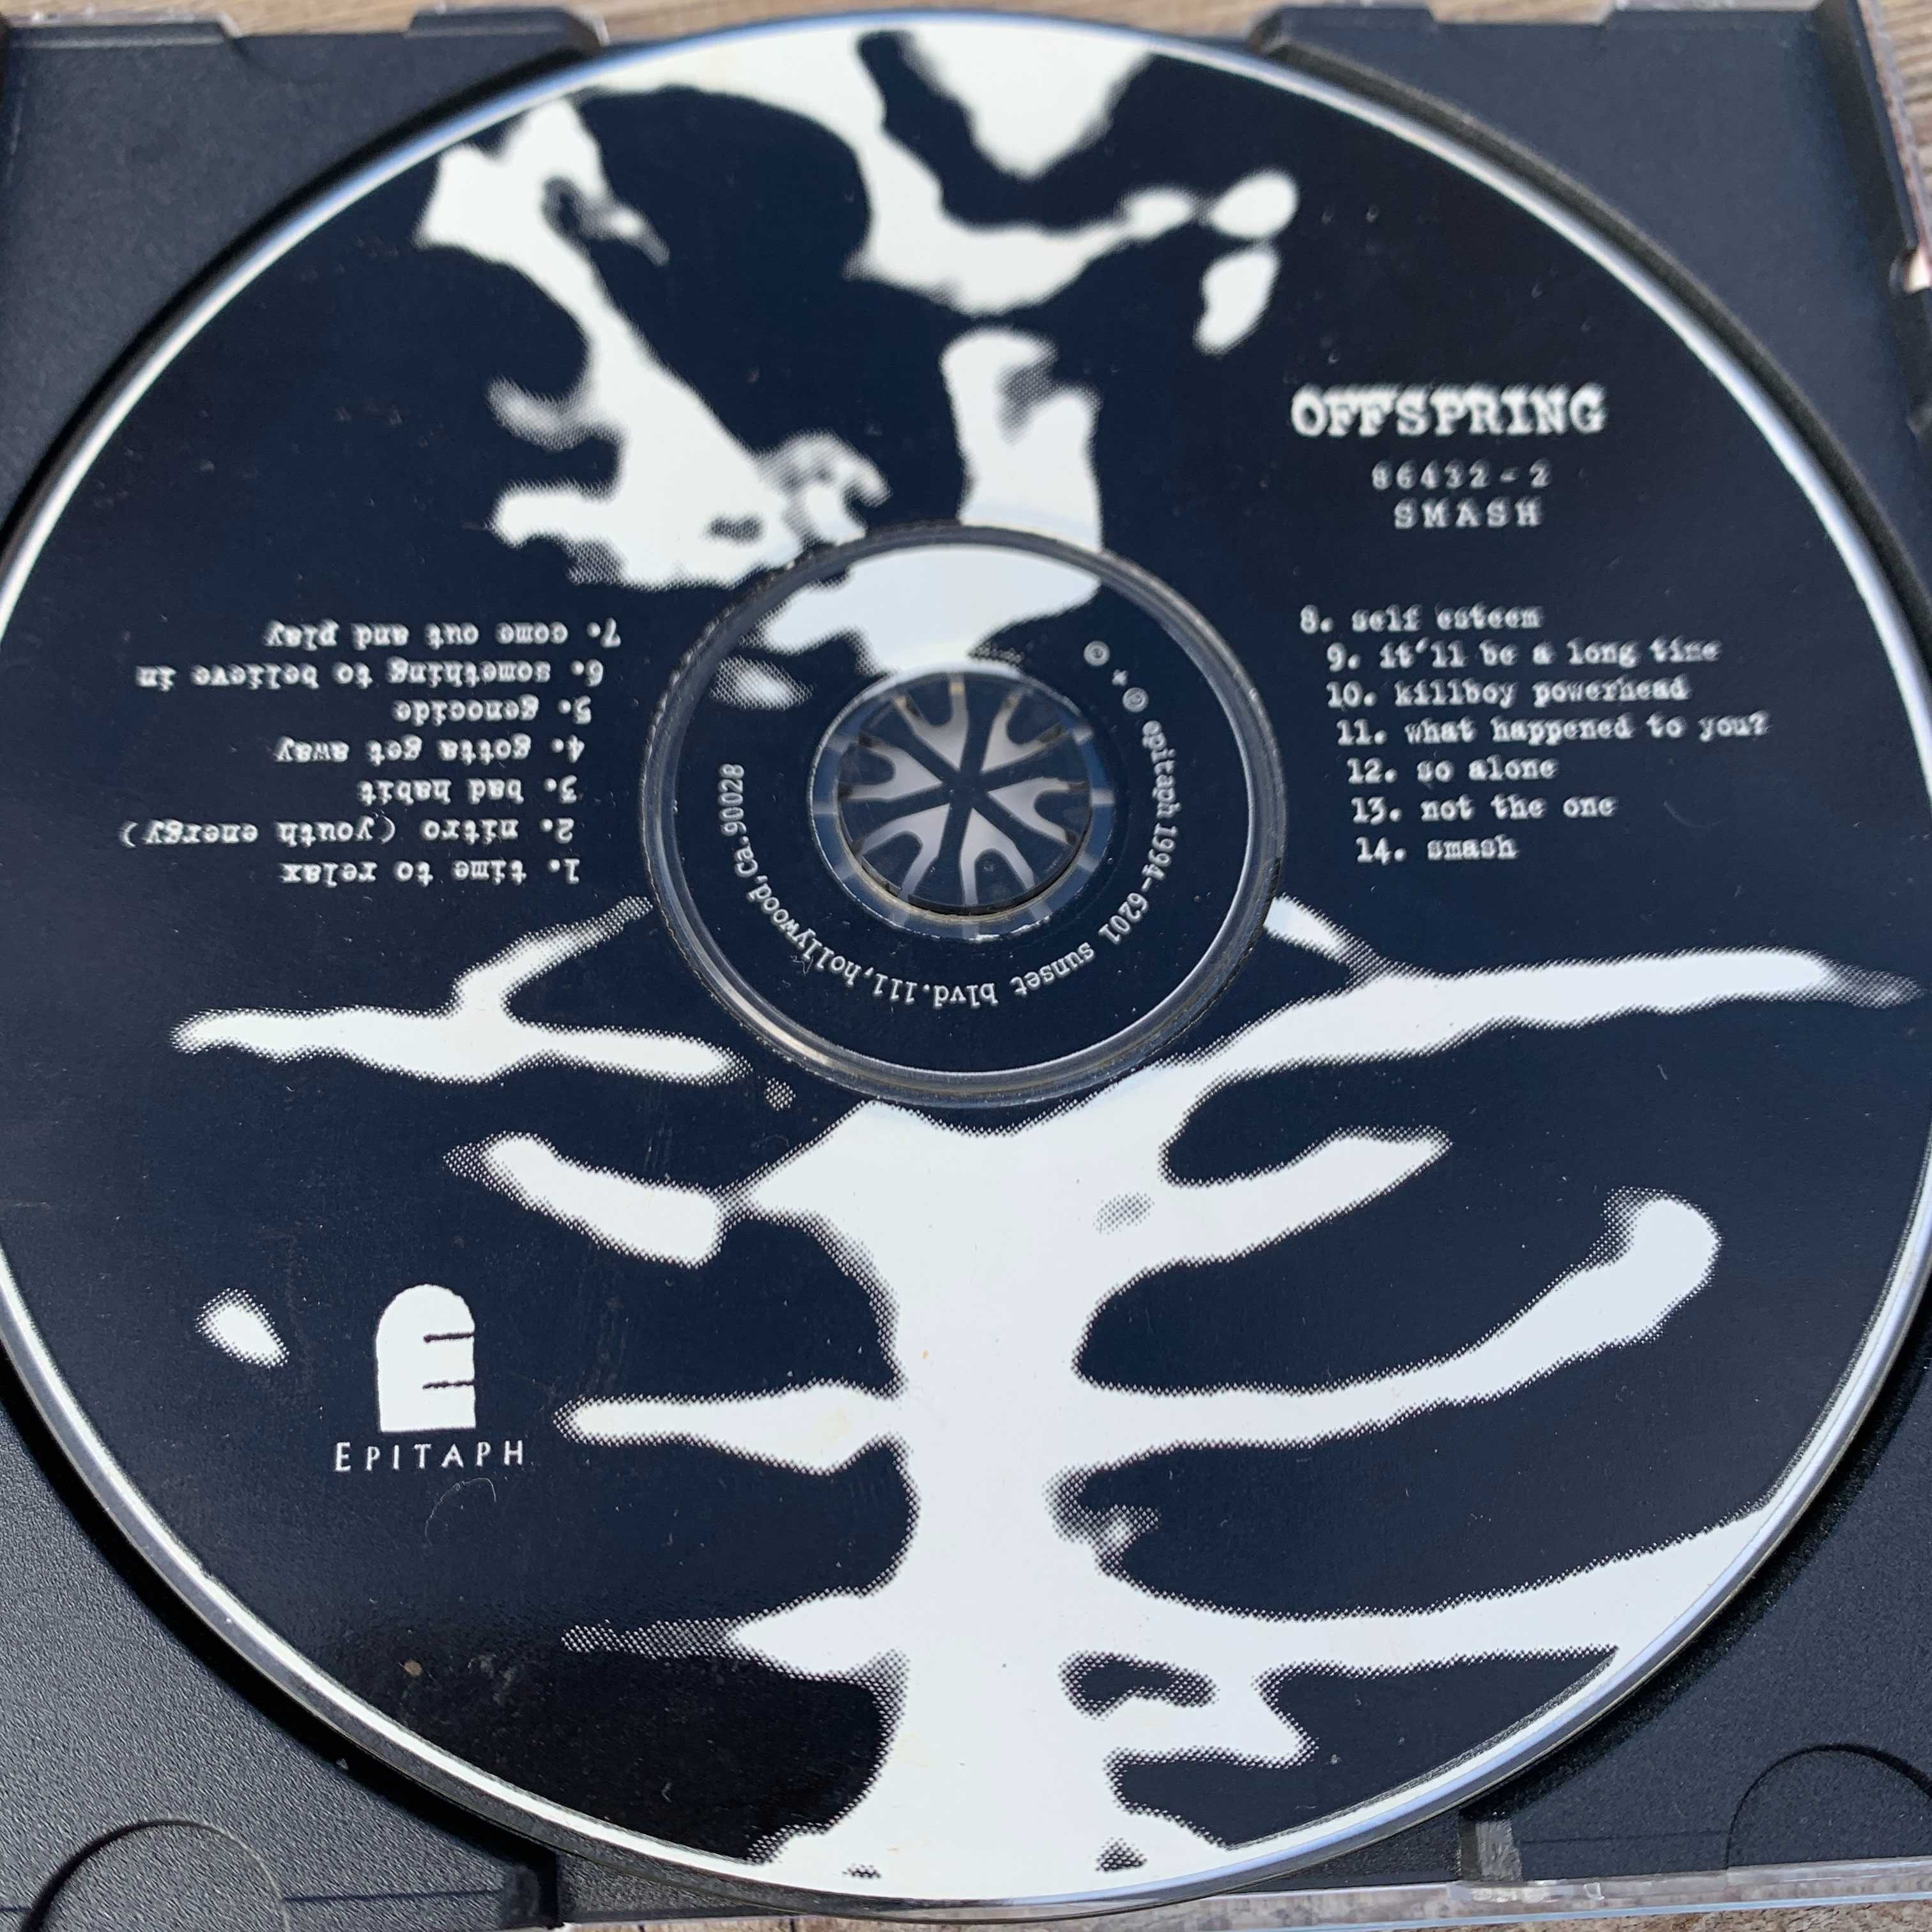 Offspring – Smash (Epitaph – 86432-2 USA) ліцензійний  аудіо сд